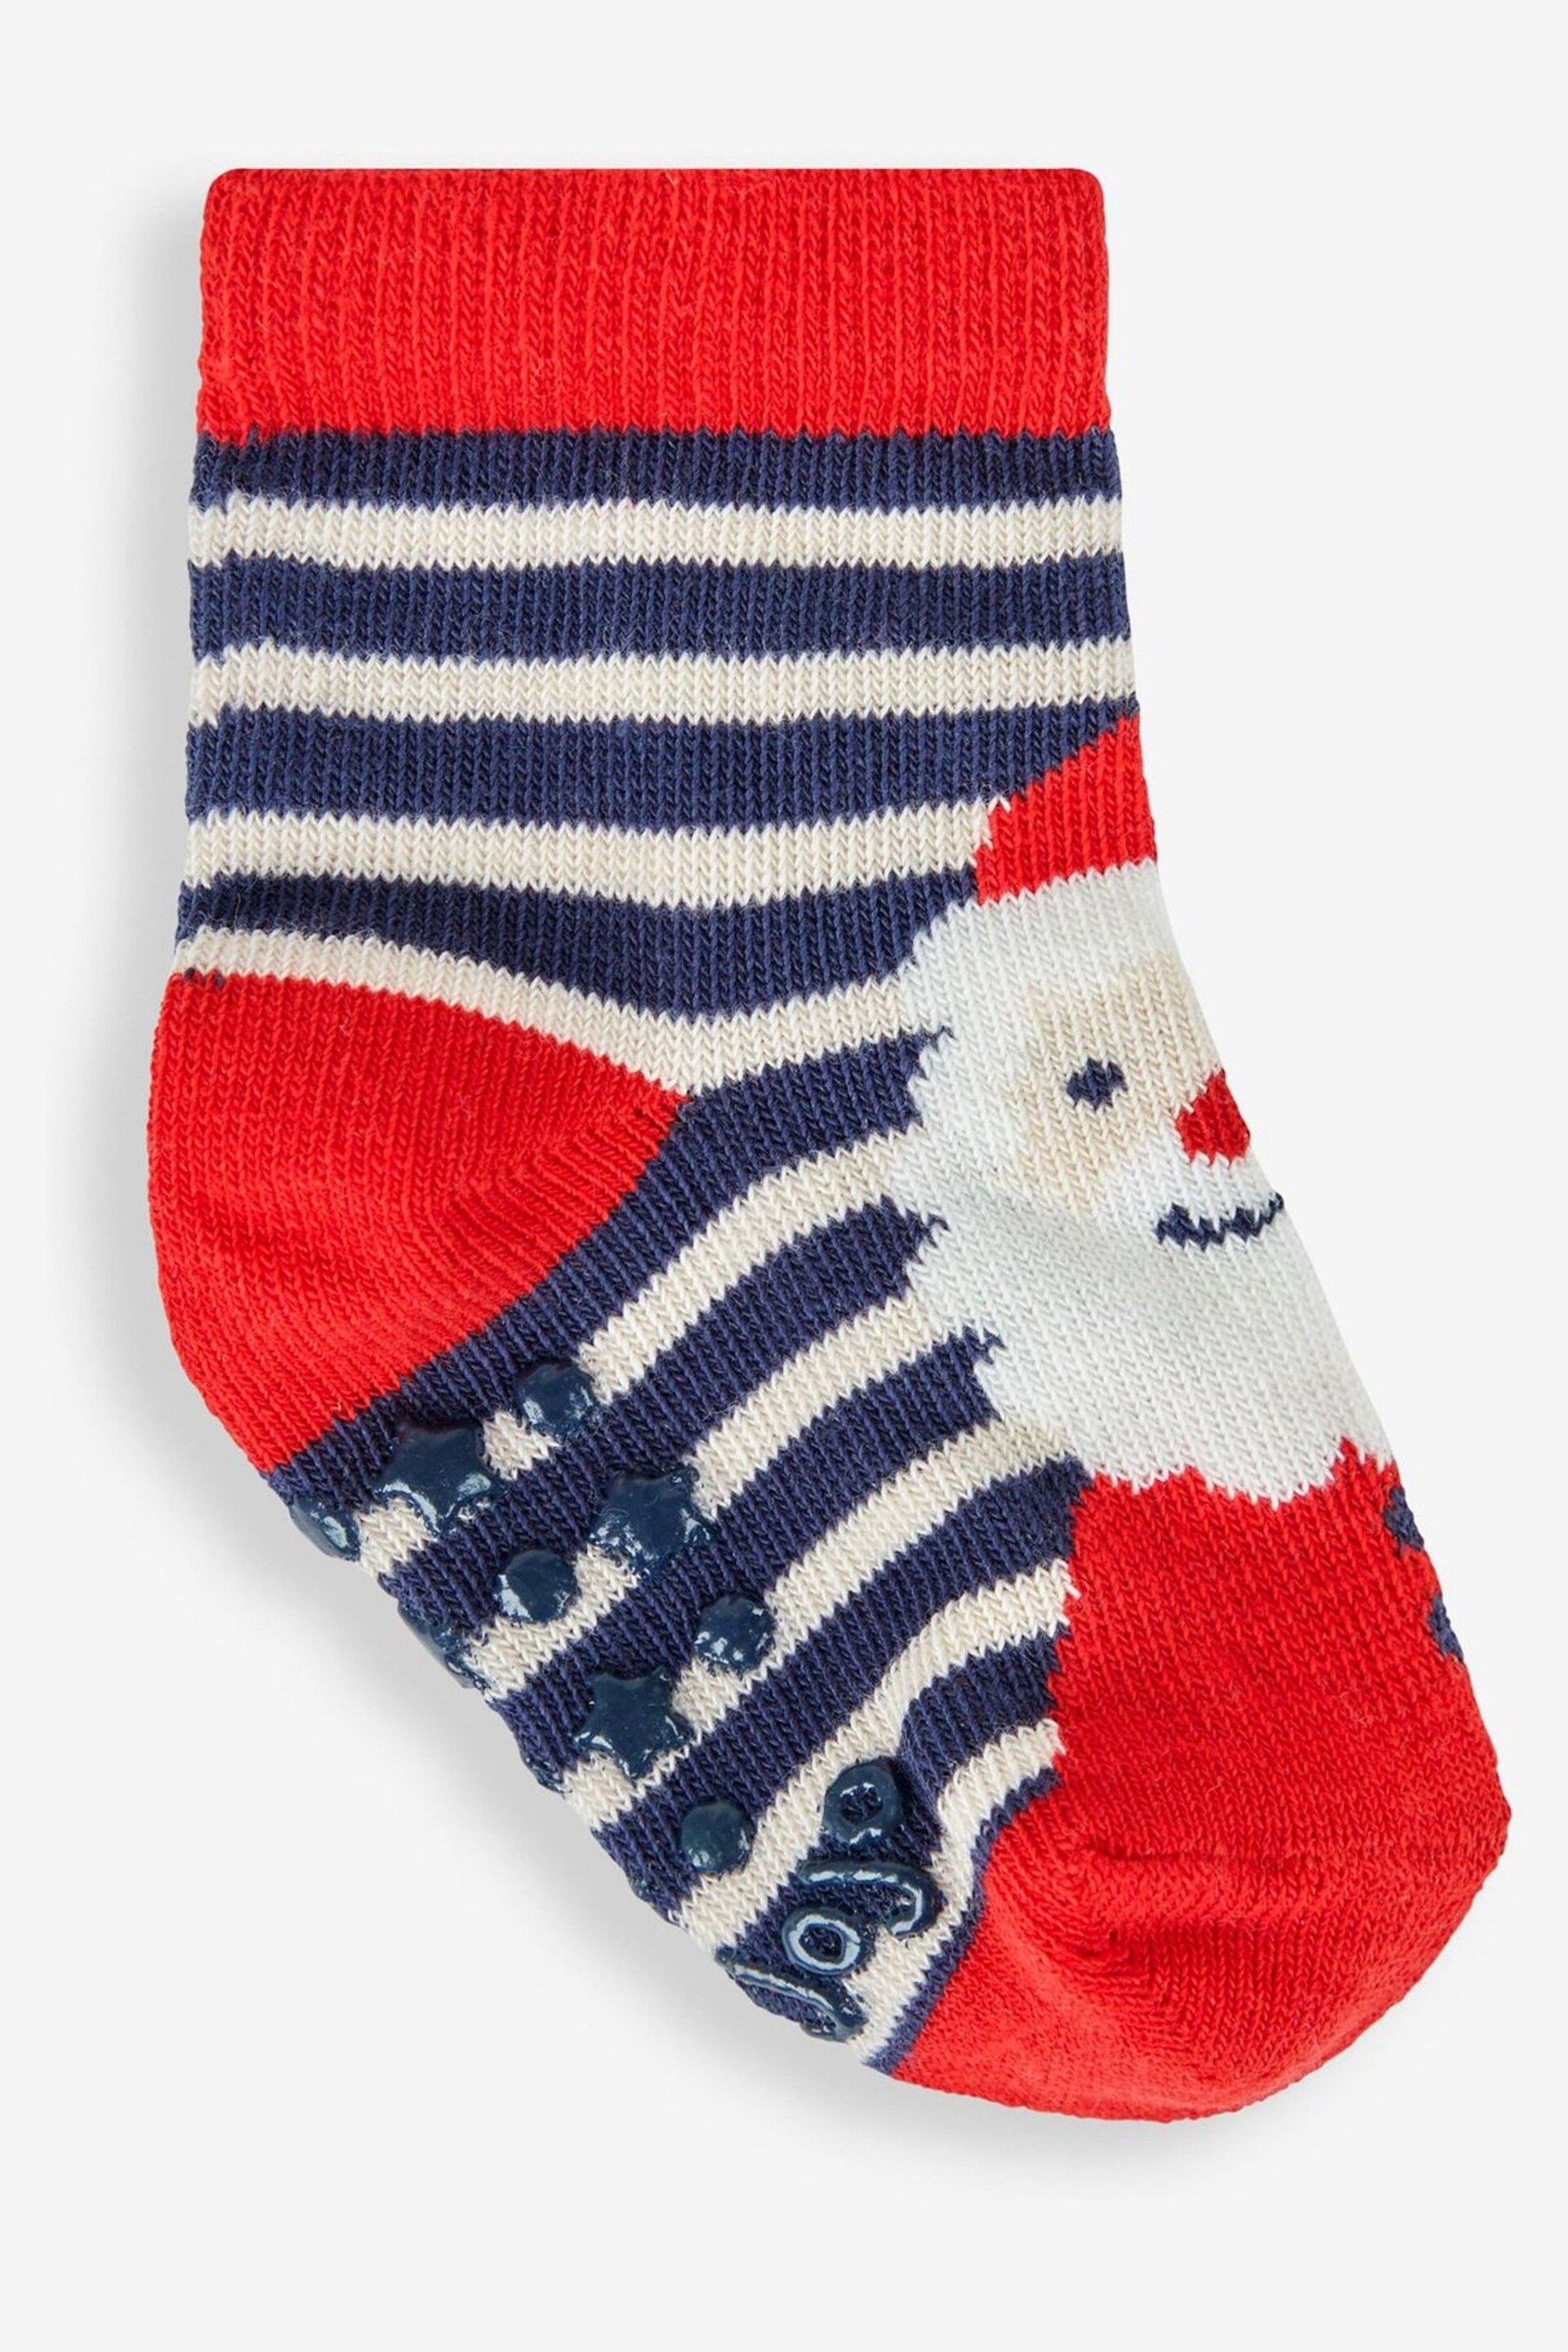 JoJo Maman Bébé Multi Kids' 3-Pack Father Christmas Socks - Image 4 of 7